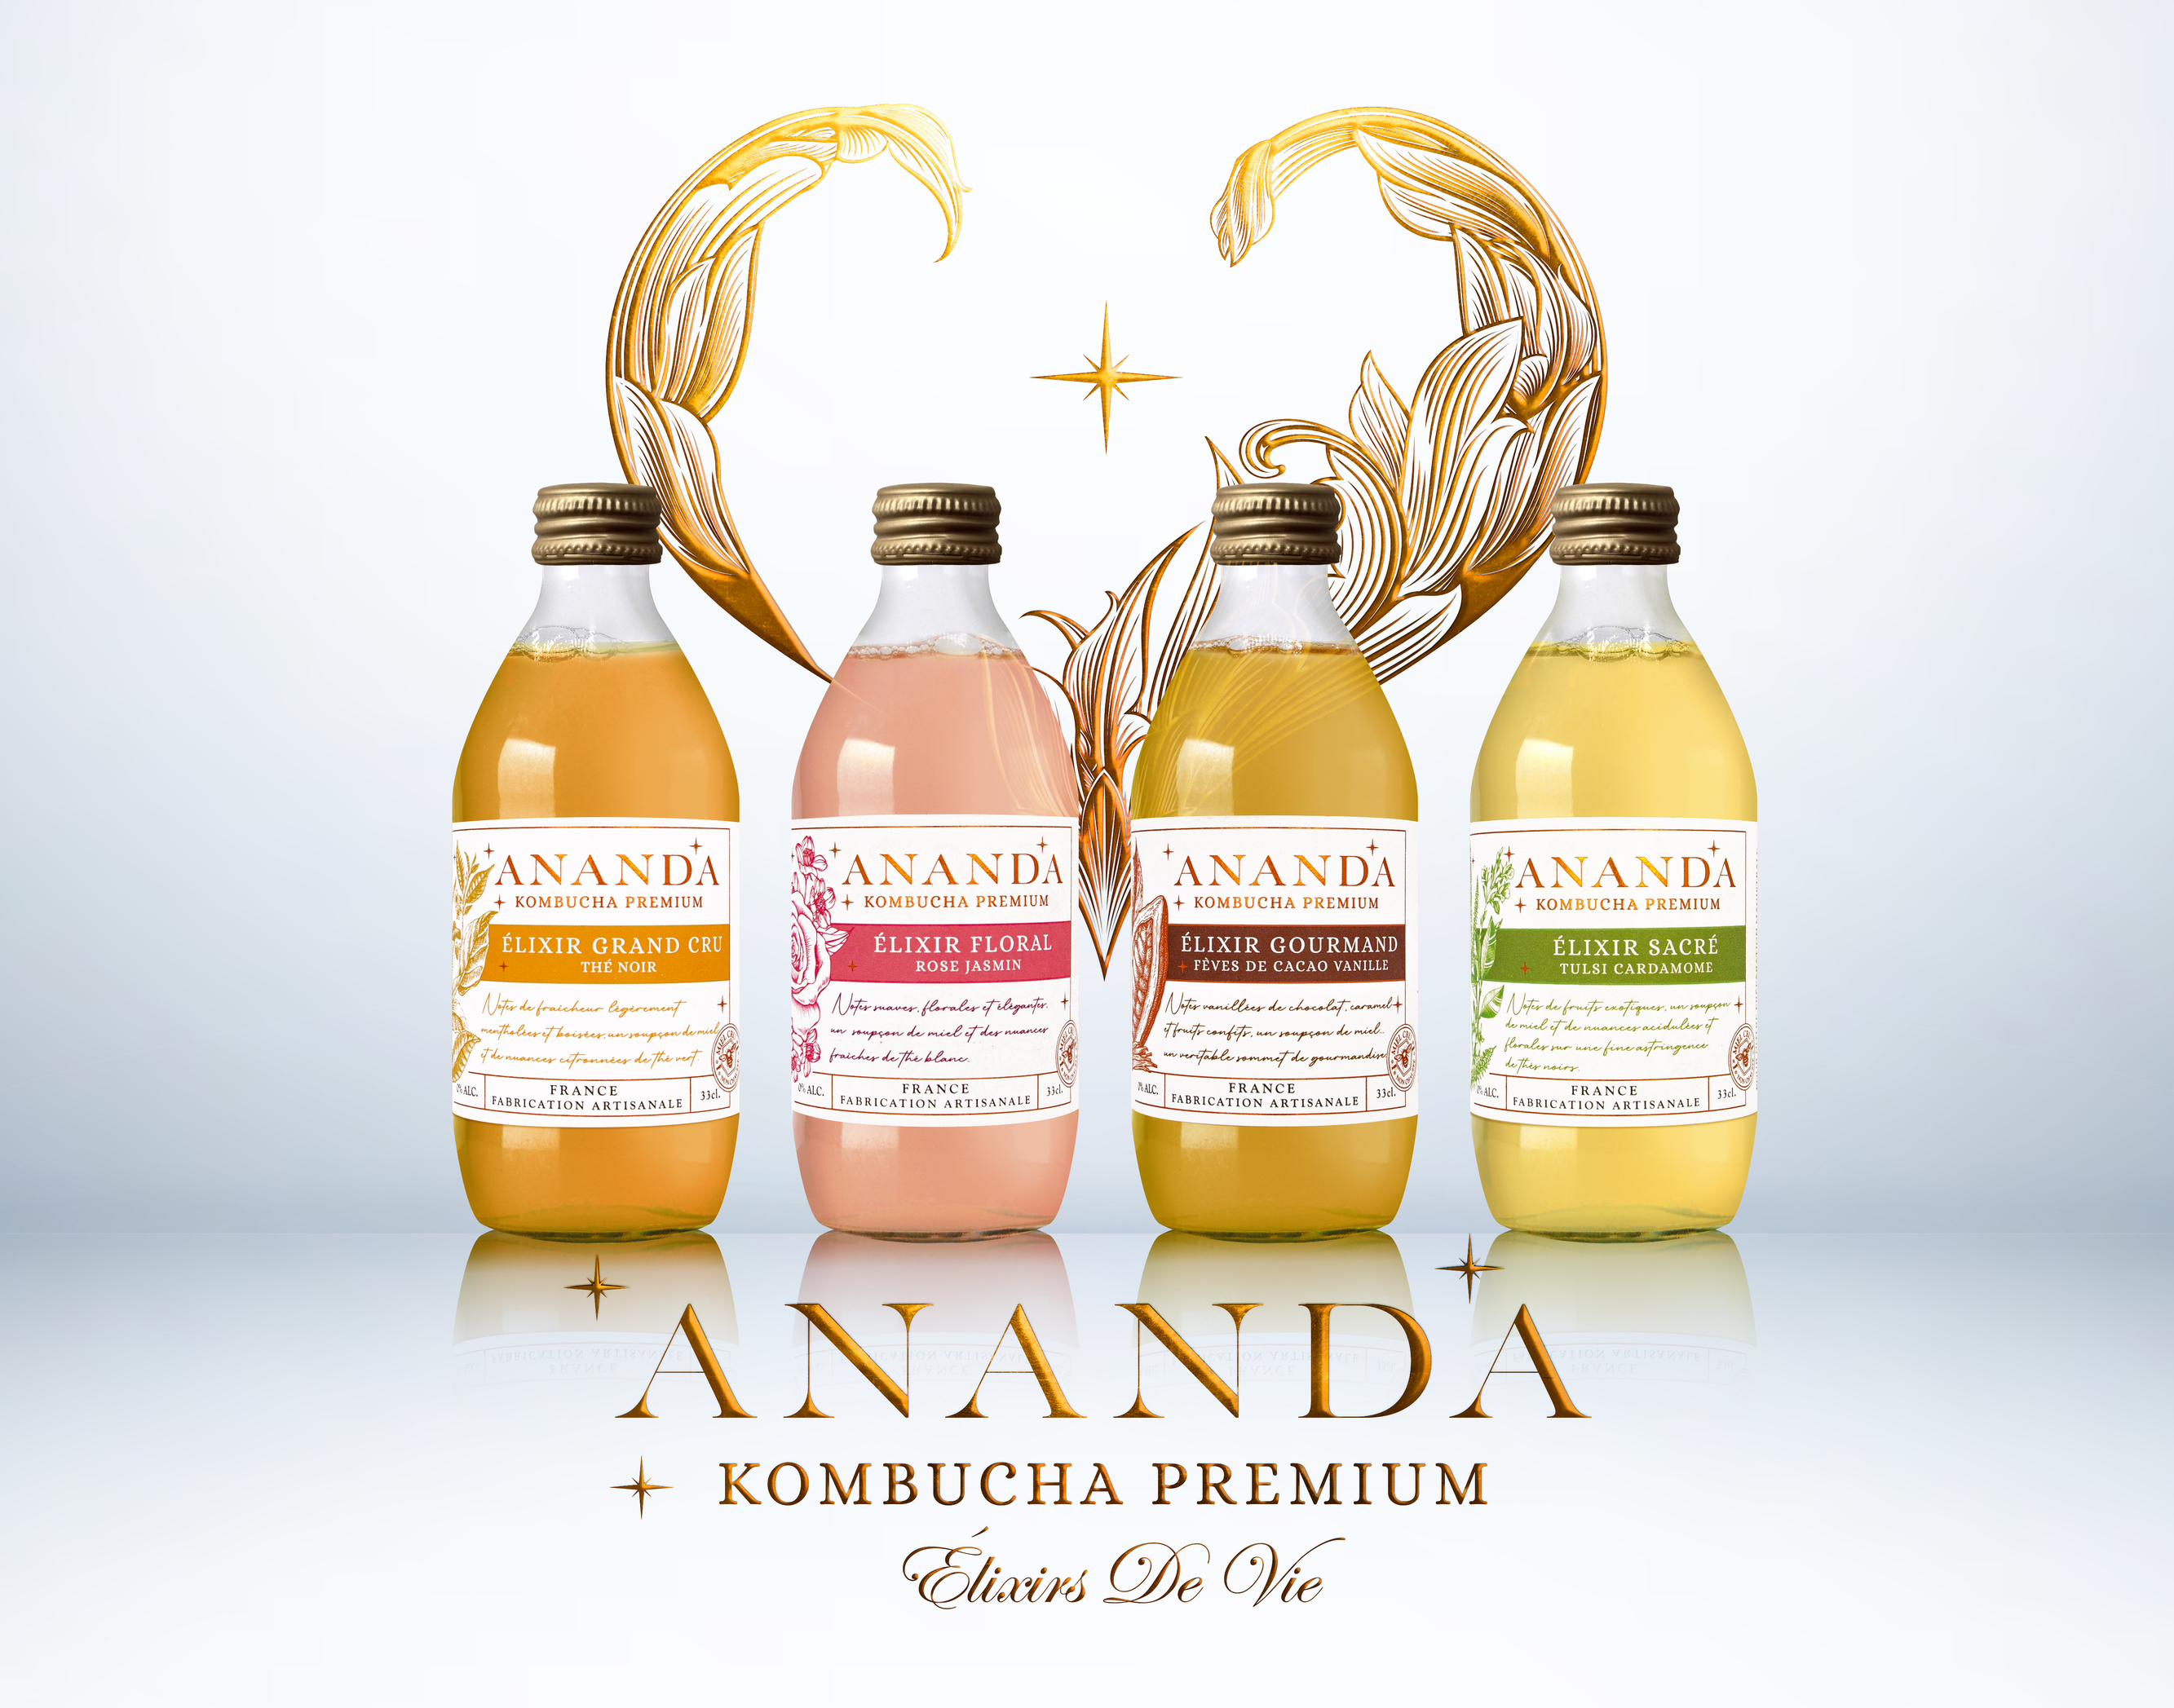 aperçu des produits Ananda Kombucha